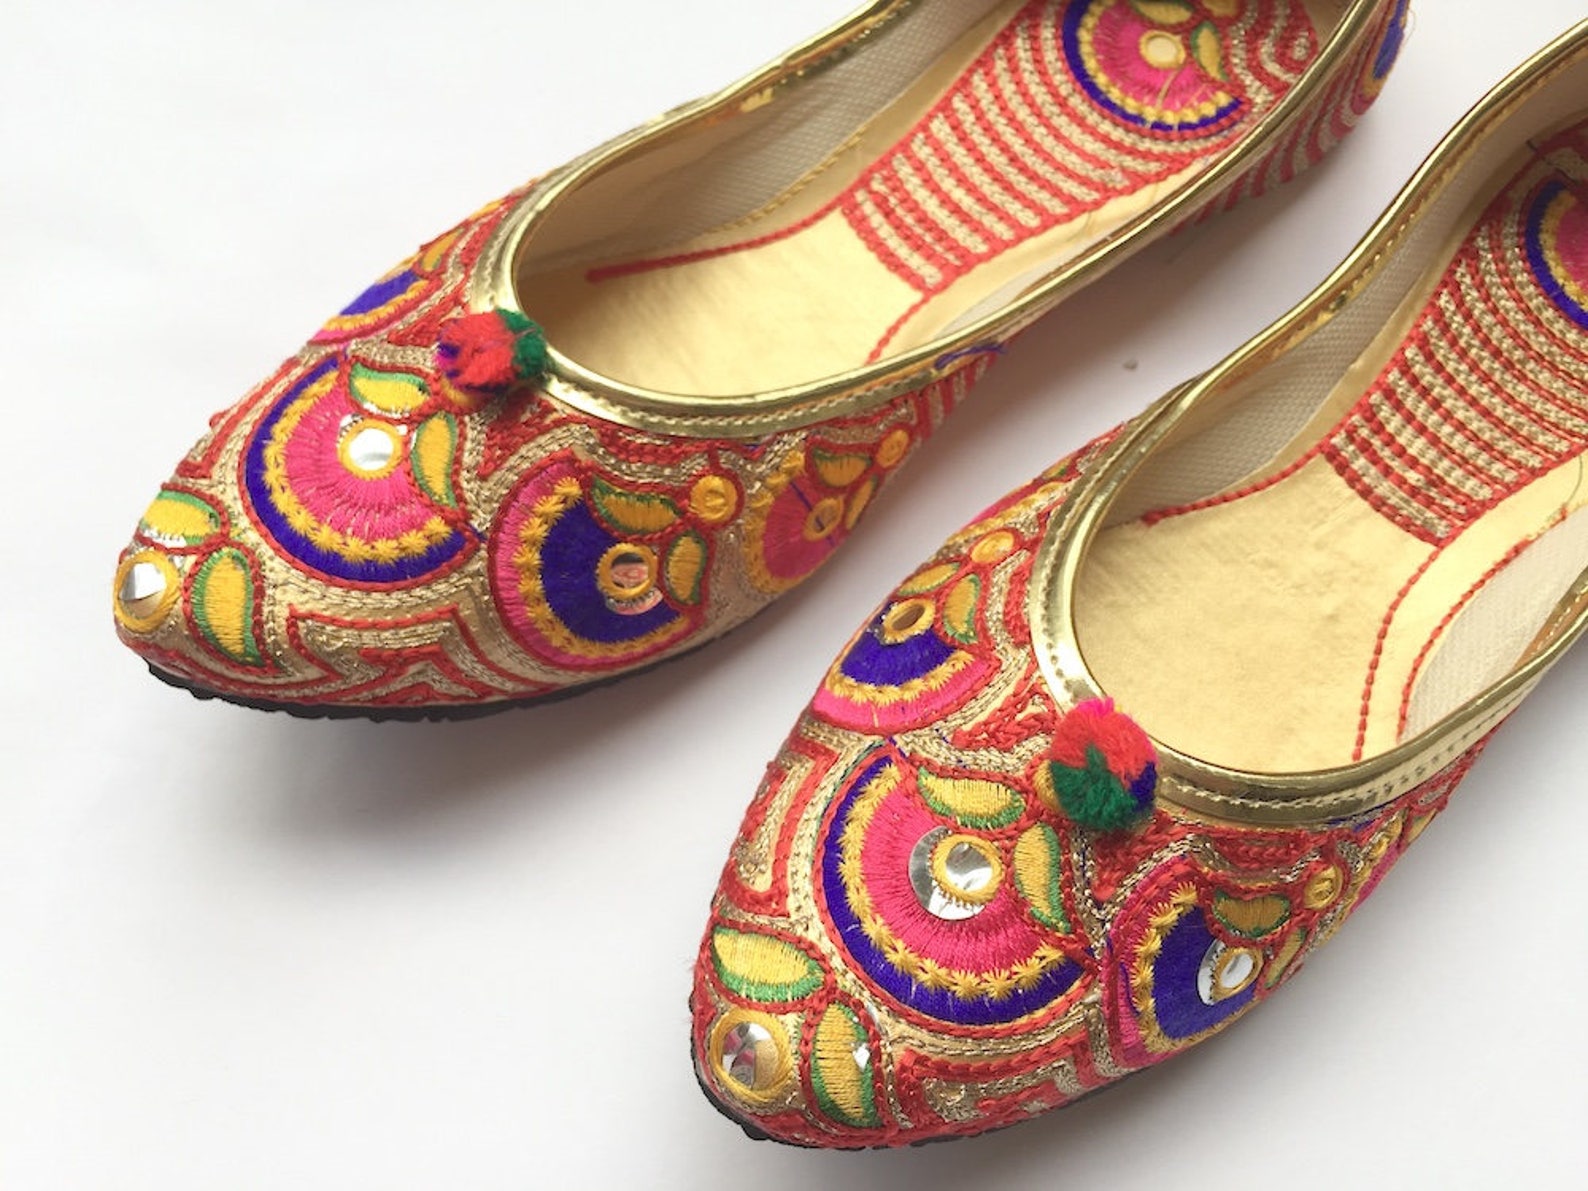 us size 8.5 - womens multi color paisley ballet flat shoes/boho shoes/slip on shoes/handmade indian designer women mojaris or ju